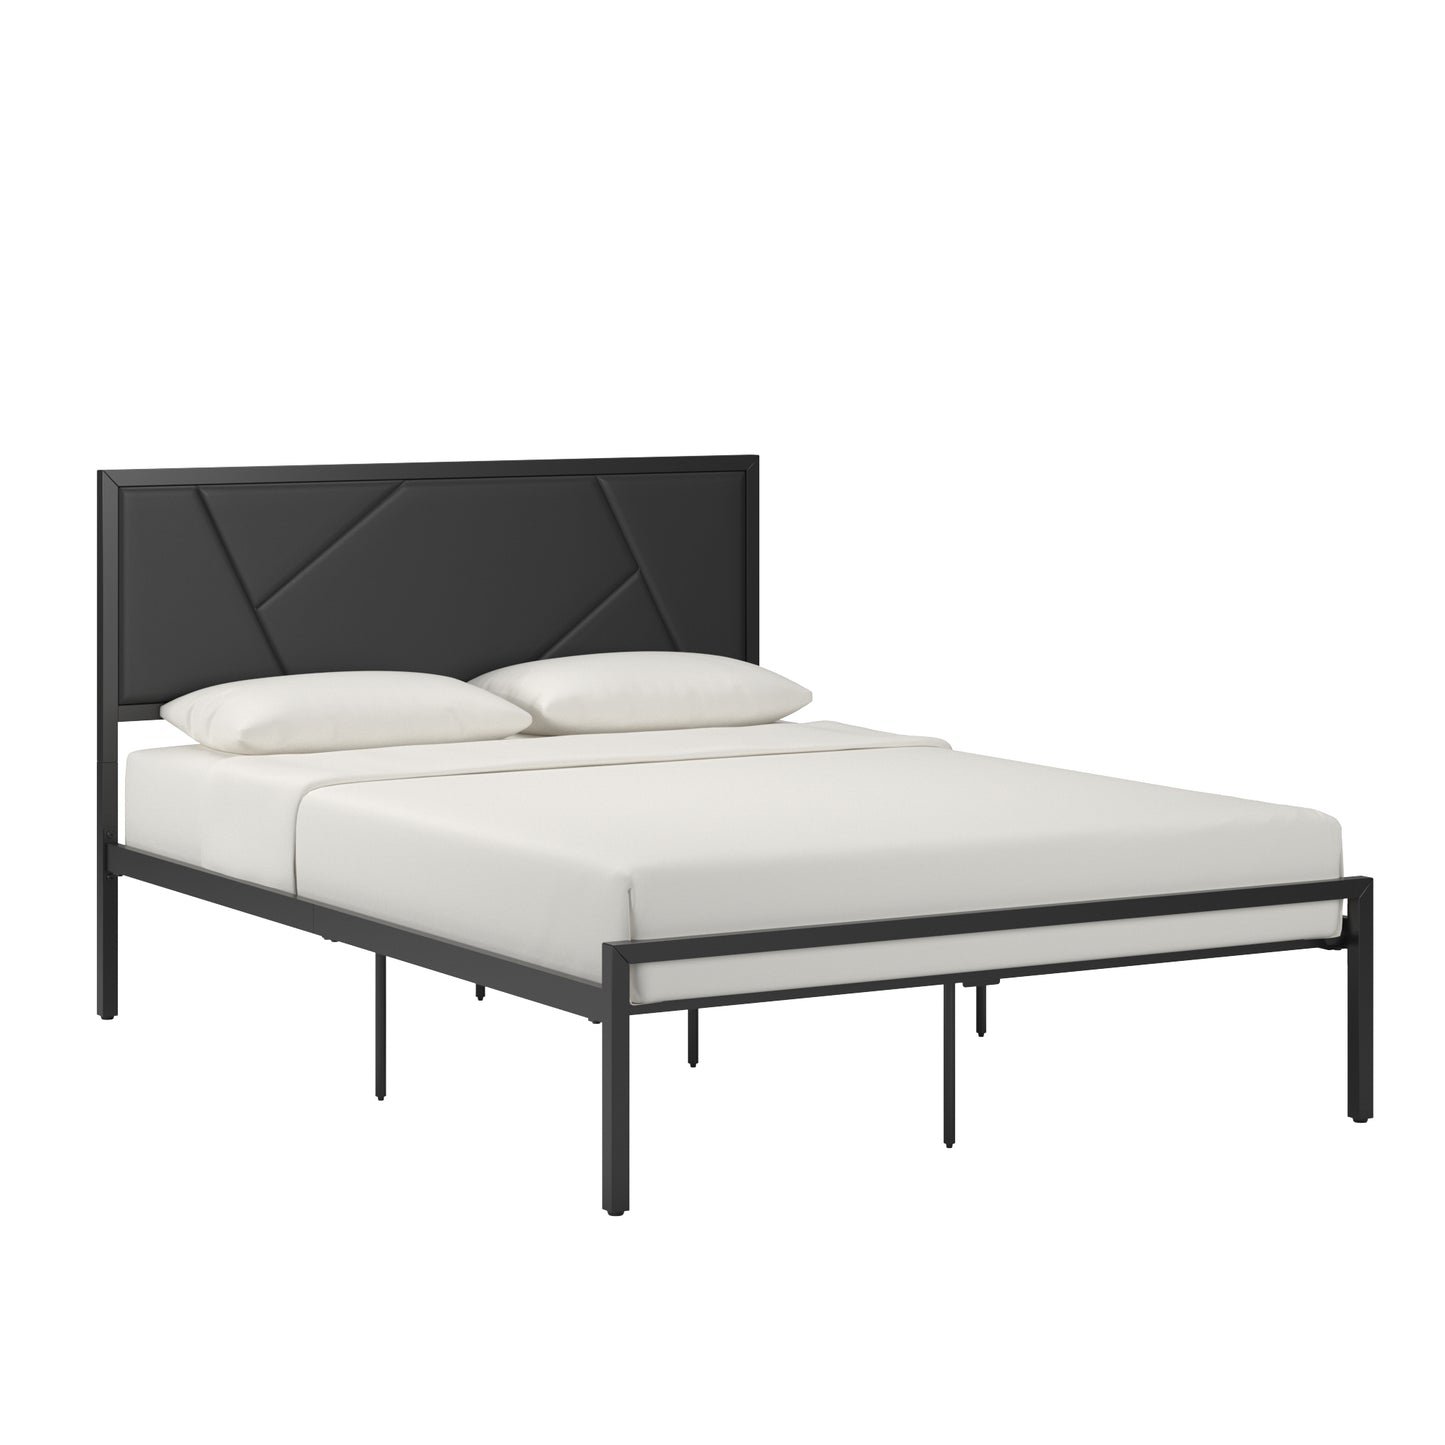 Metal Platform Bed with Geometric Headboard - Black Finish, Full (Full Size)